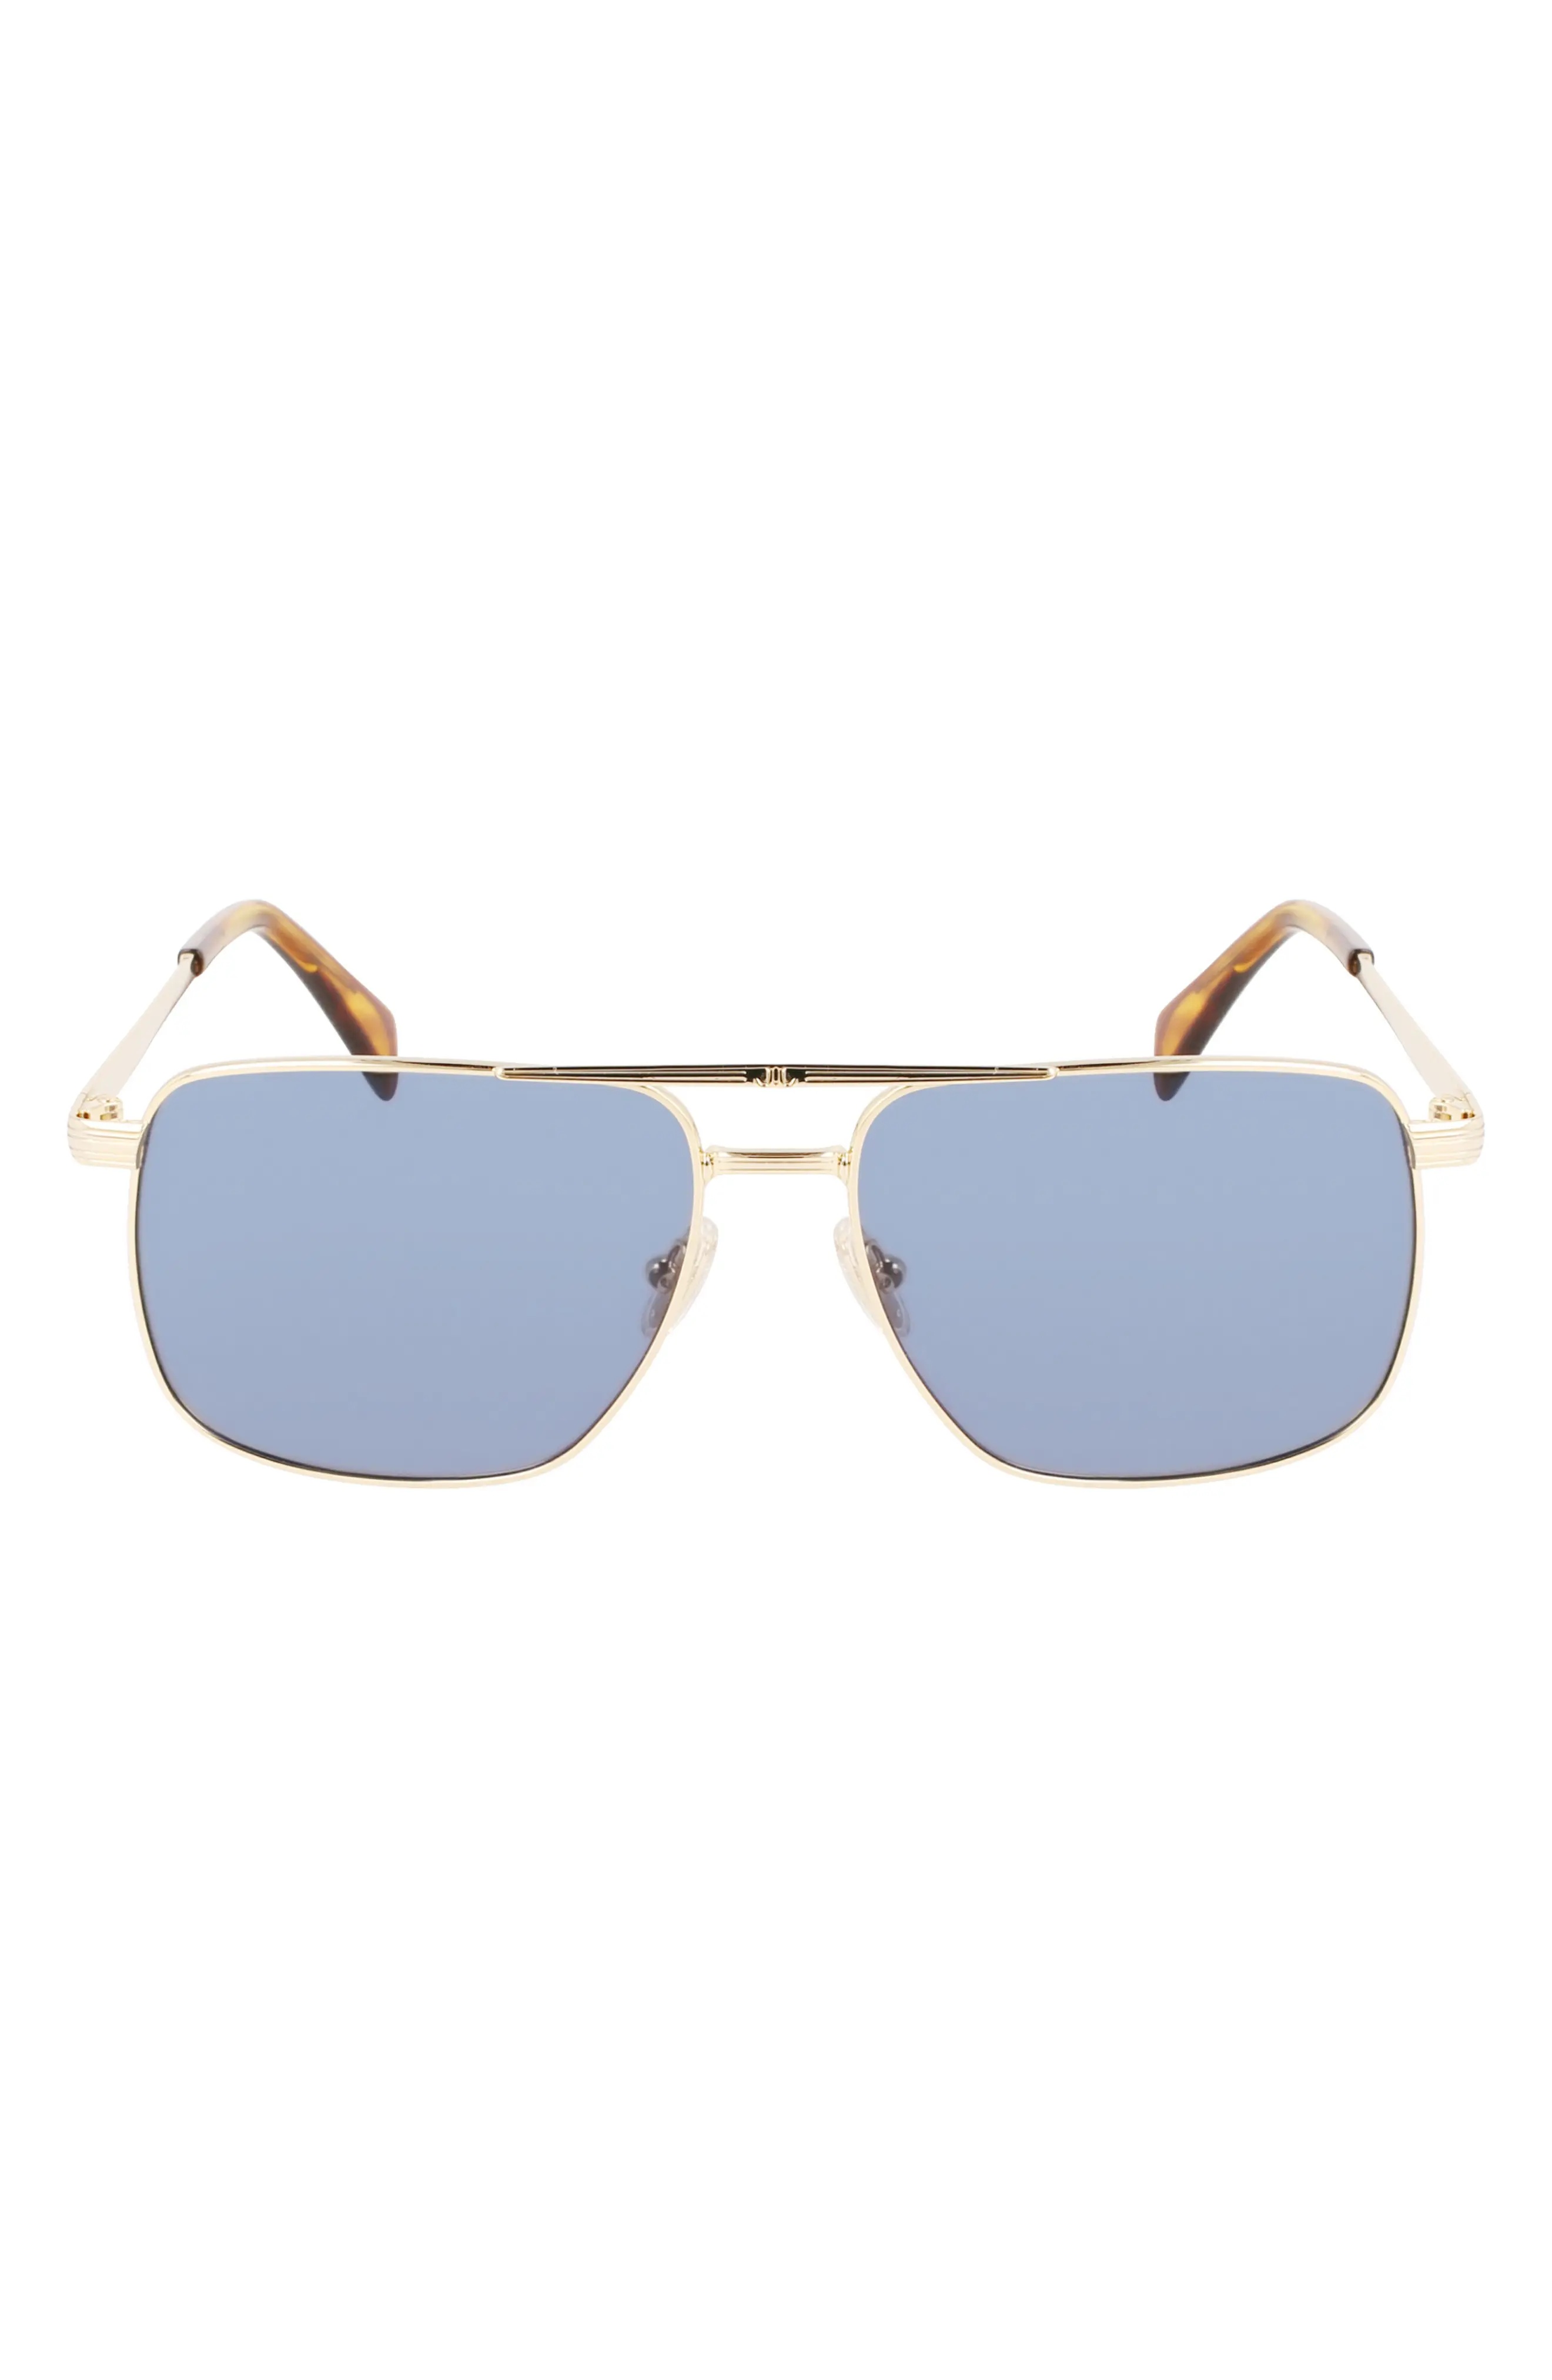 JL 58mm Rectangular Sunglasses in Gold /Blue - 1